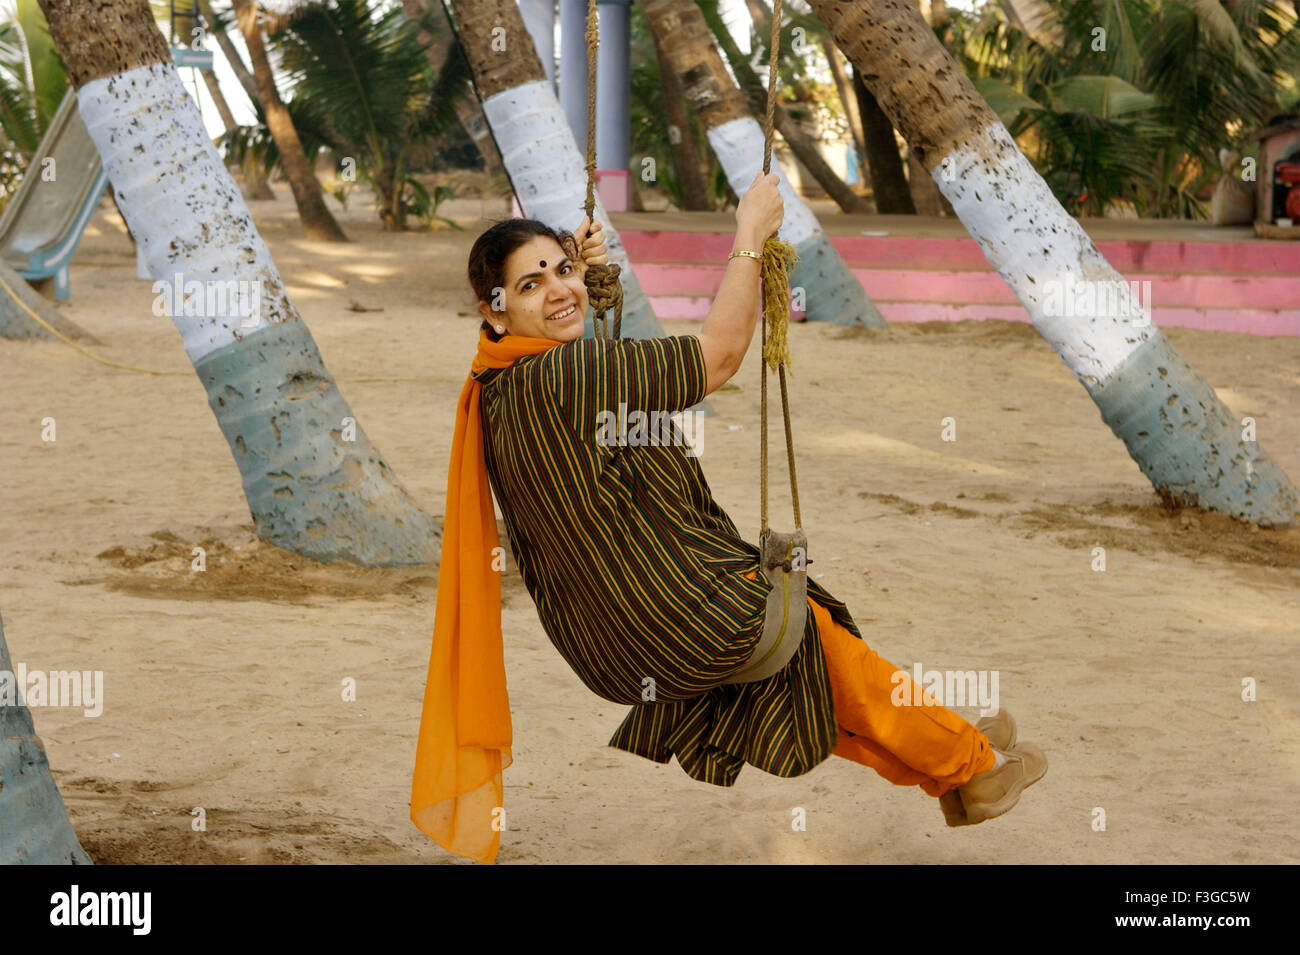 Woman on swing among coconut trees ; Murud Janjira ; Raigad ; Maharashtra ; India ; Asia Stock Photo